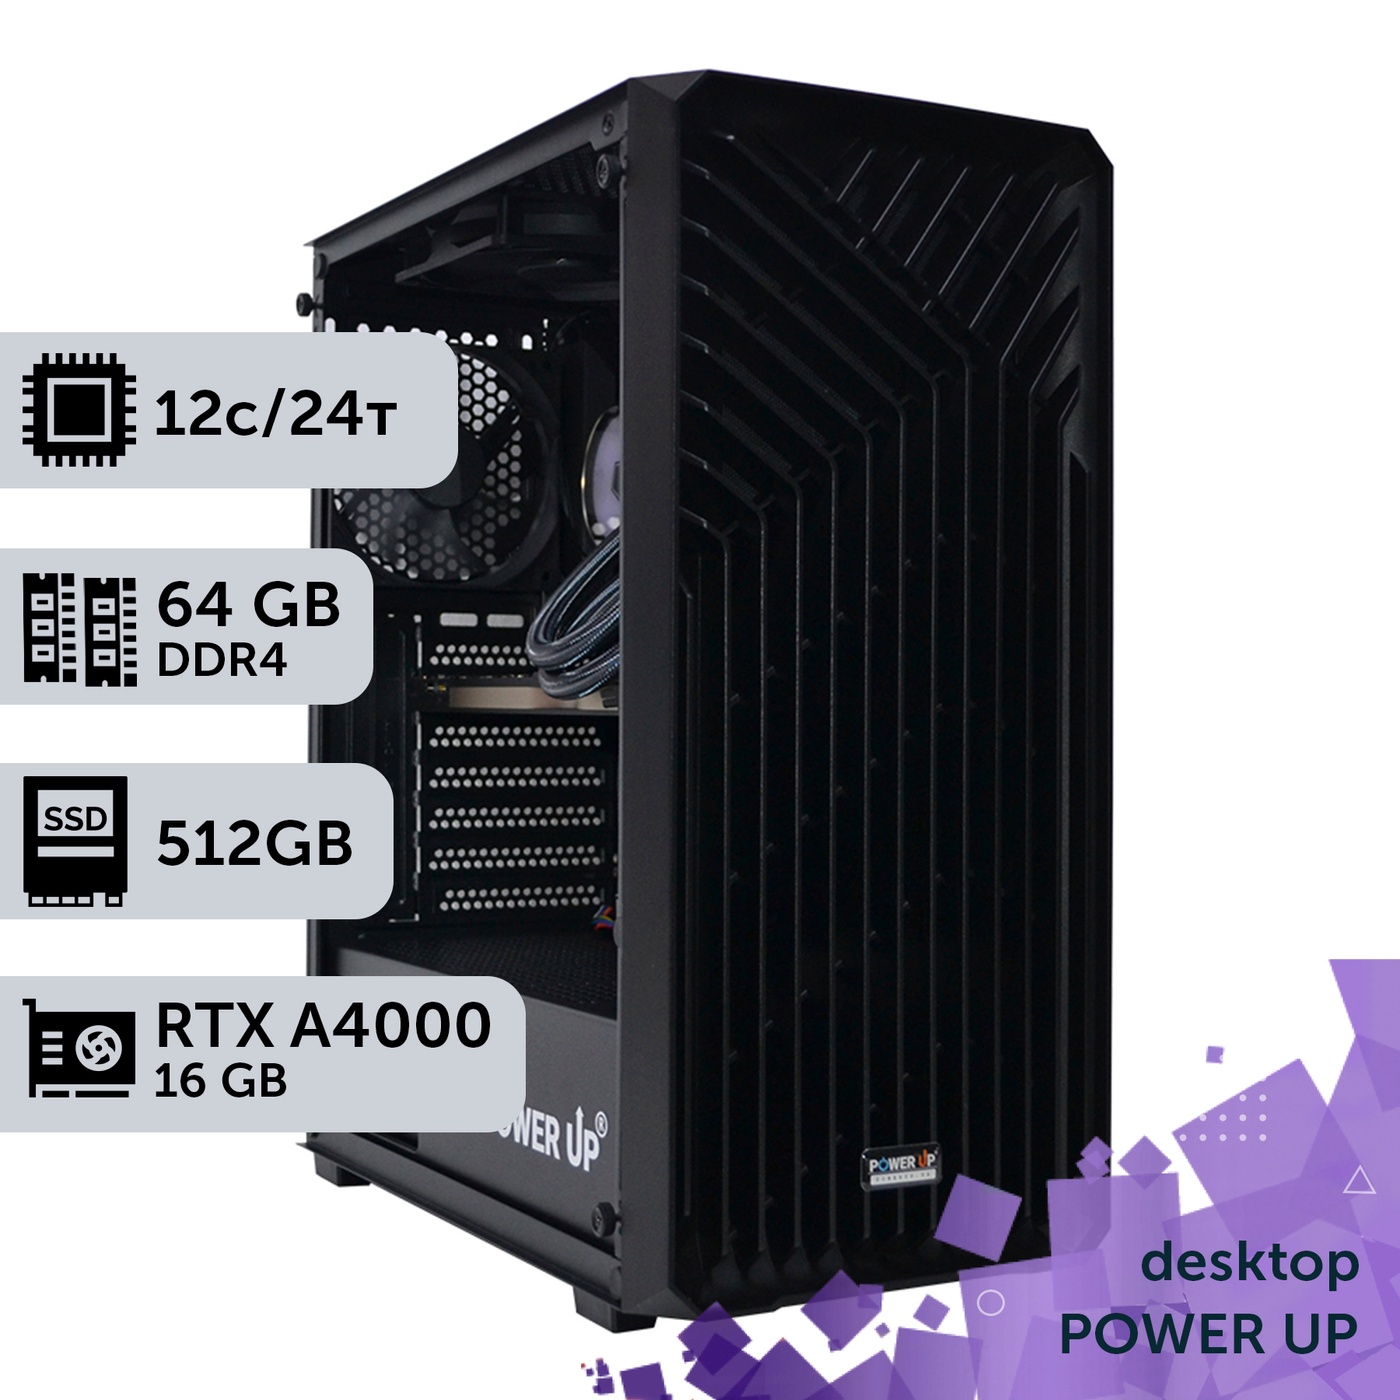 Рабочая станция PowerUp Desktop #103 Ryzen 9 5900x/64 GB/HDD 2 TB/SSD 512GB/NVIDIA Quadro RTX A4000 16GB